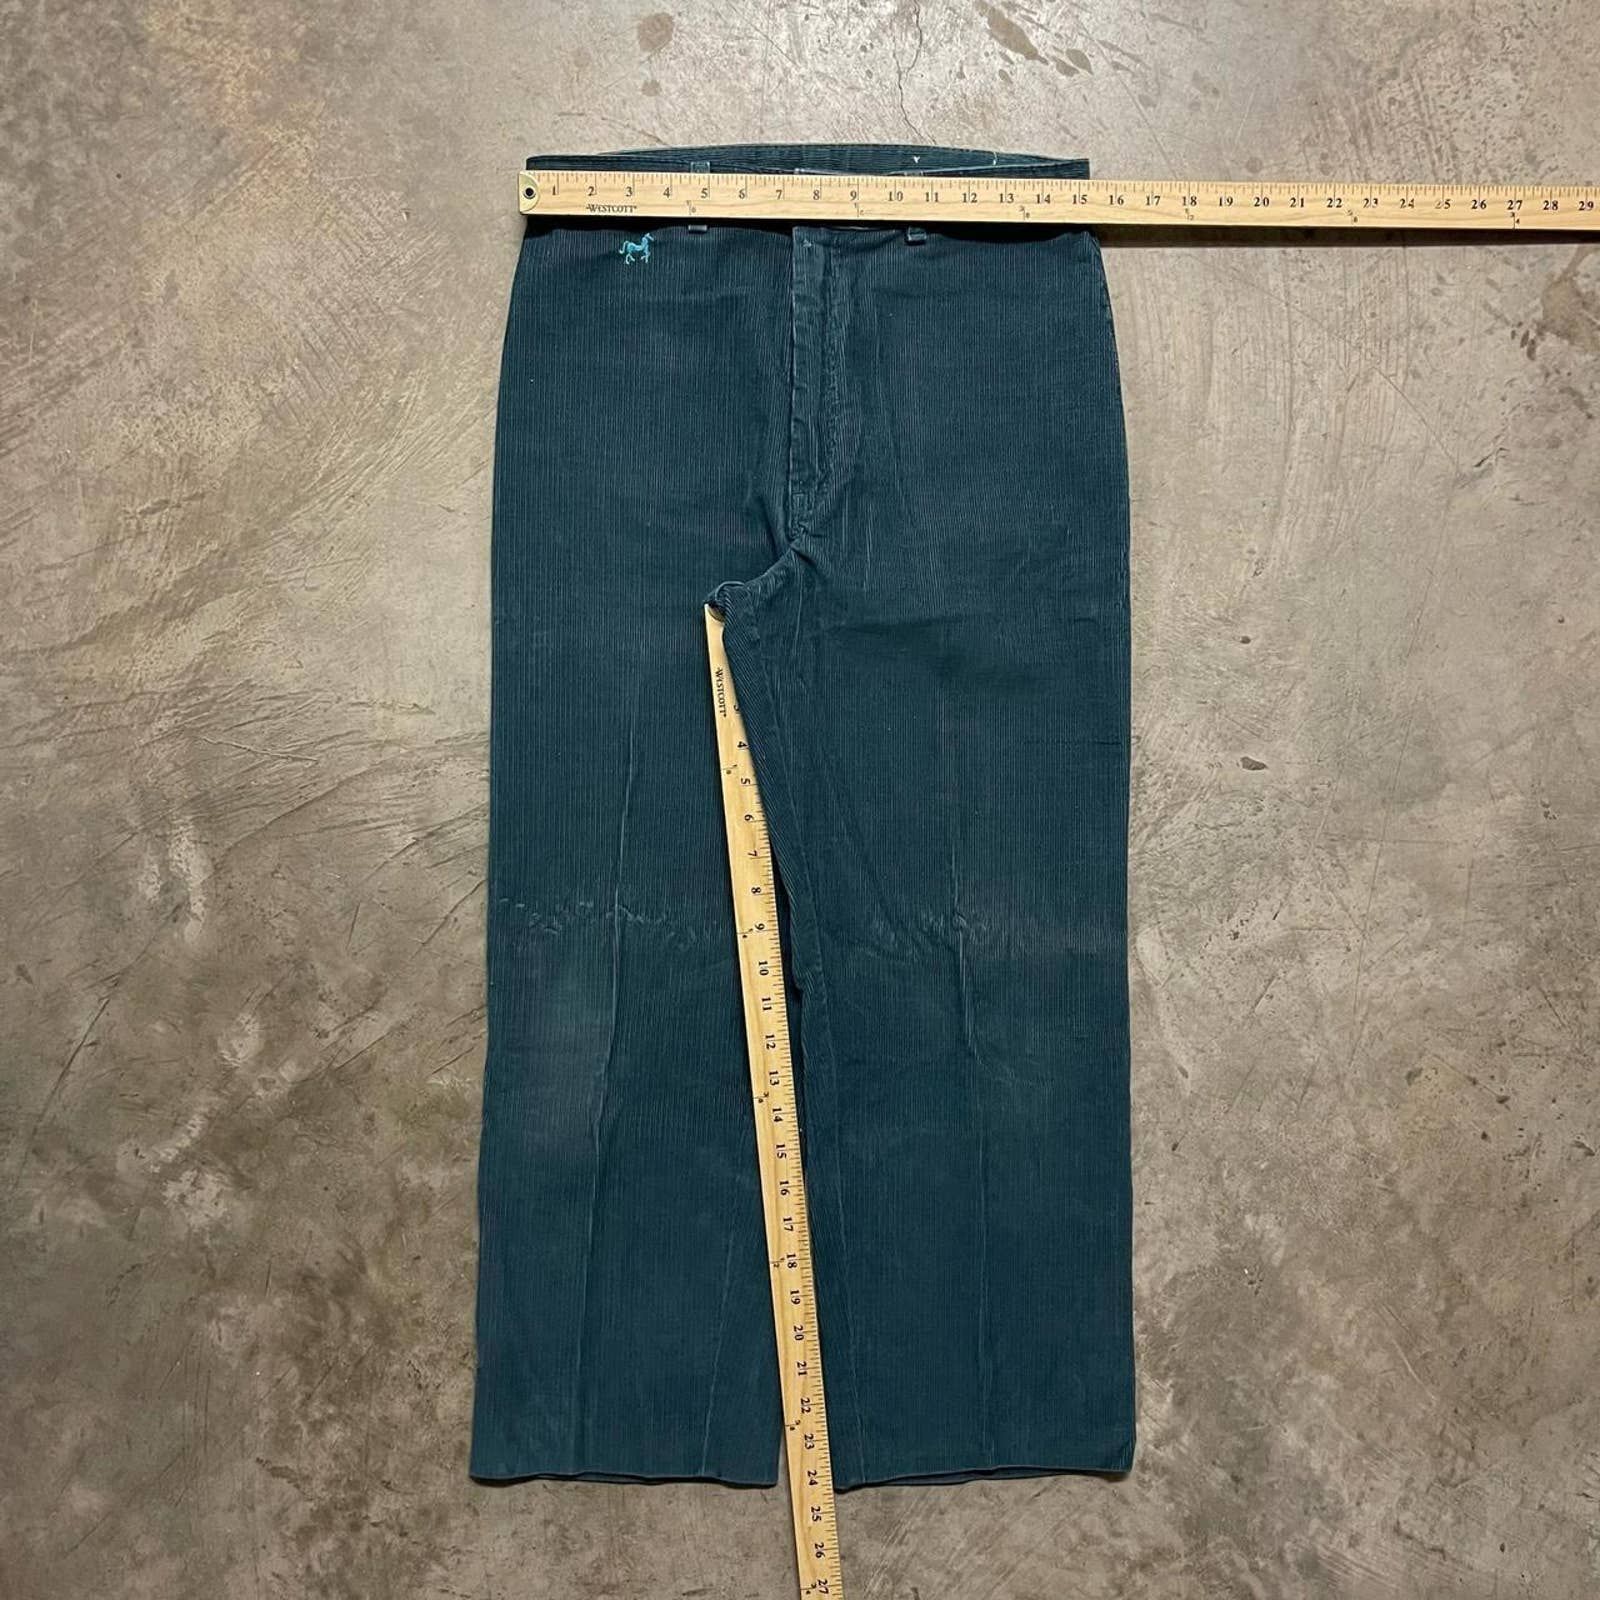 Vintage Vintage 1980s Turquoise Corduroy Casual Fit Pants Womens 16 Size 38" / US 16 / IT 52 - 4 Preview